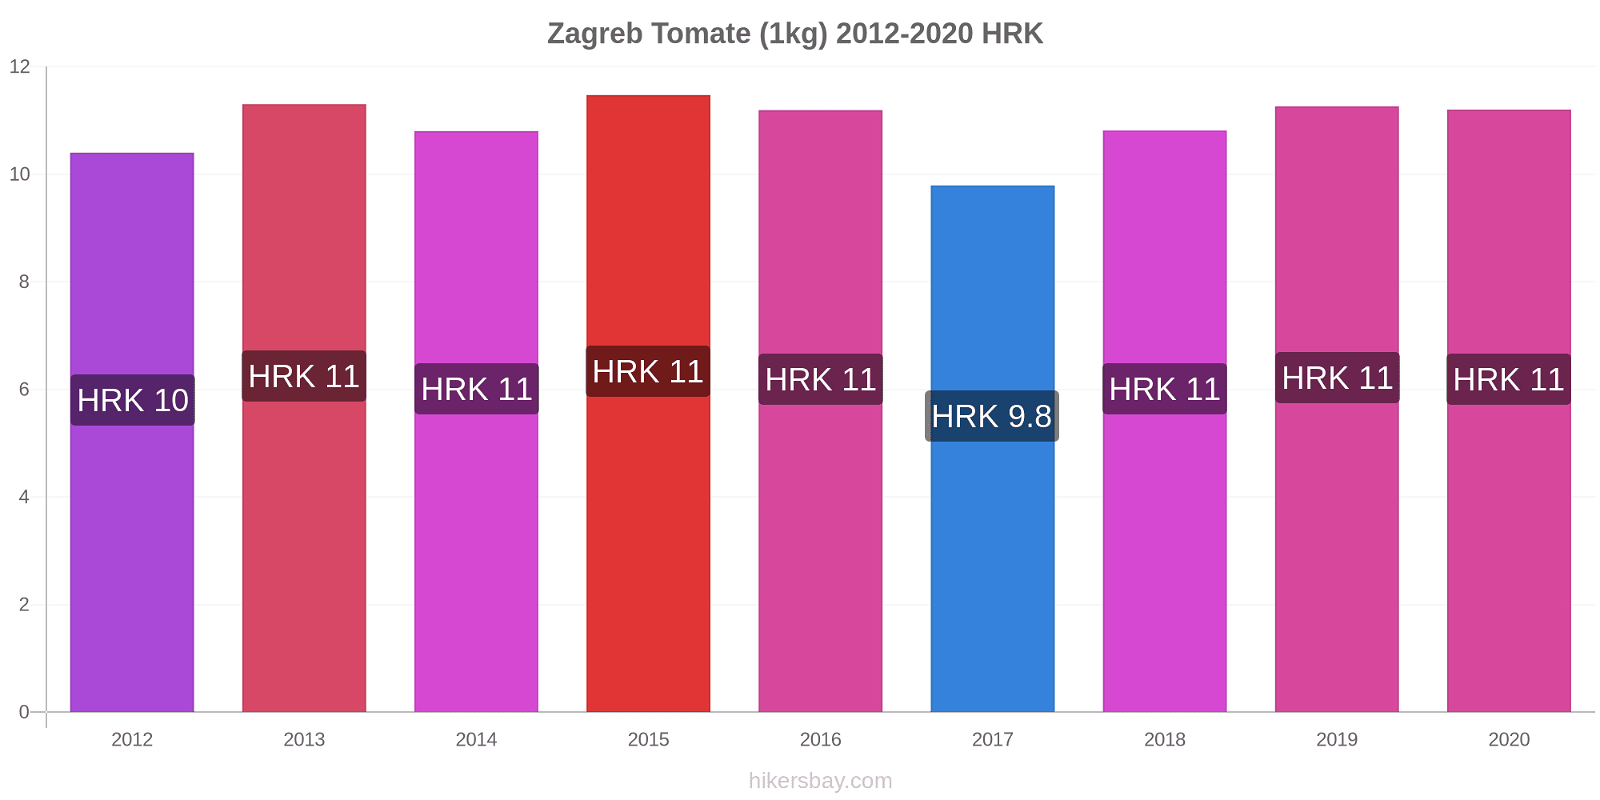 Zagreb variação de preço Tomate (1kg) hikersbay.com